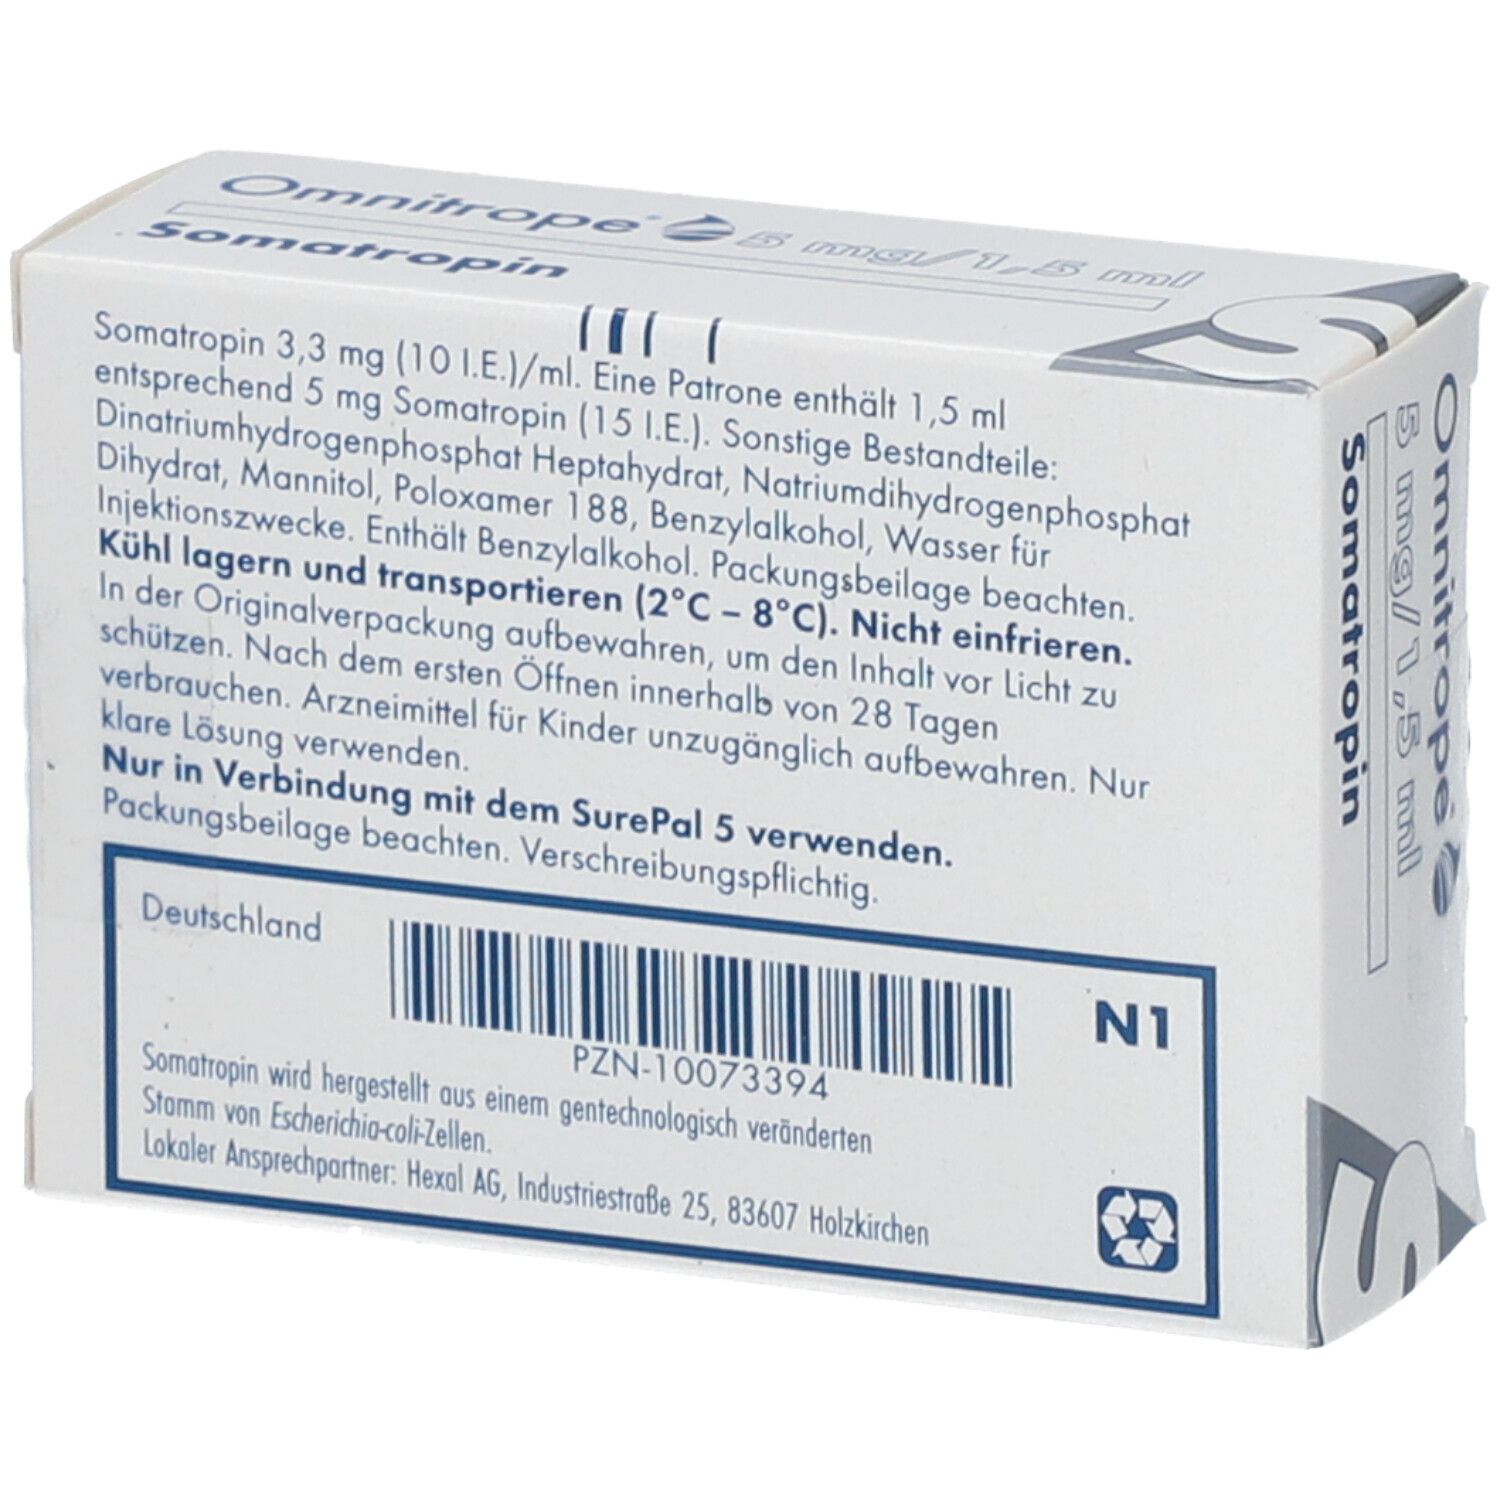 Omnitrope® 5 mg/1,5 ml